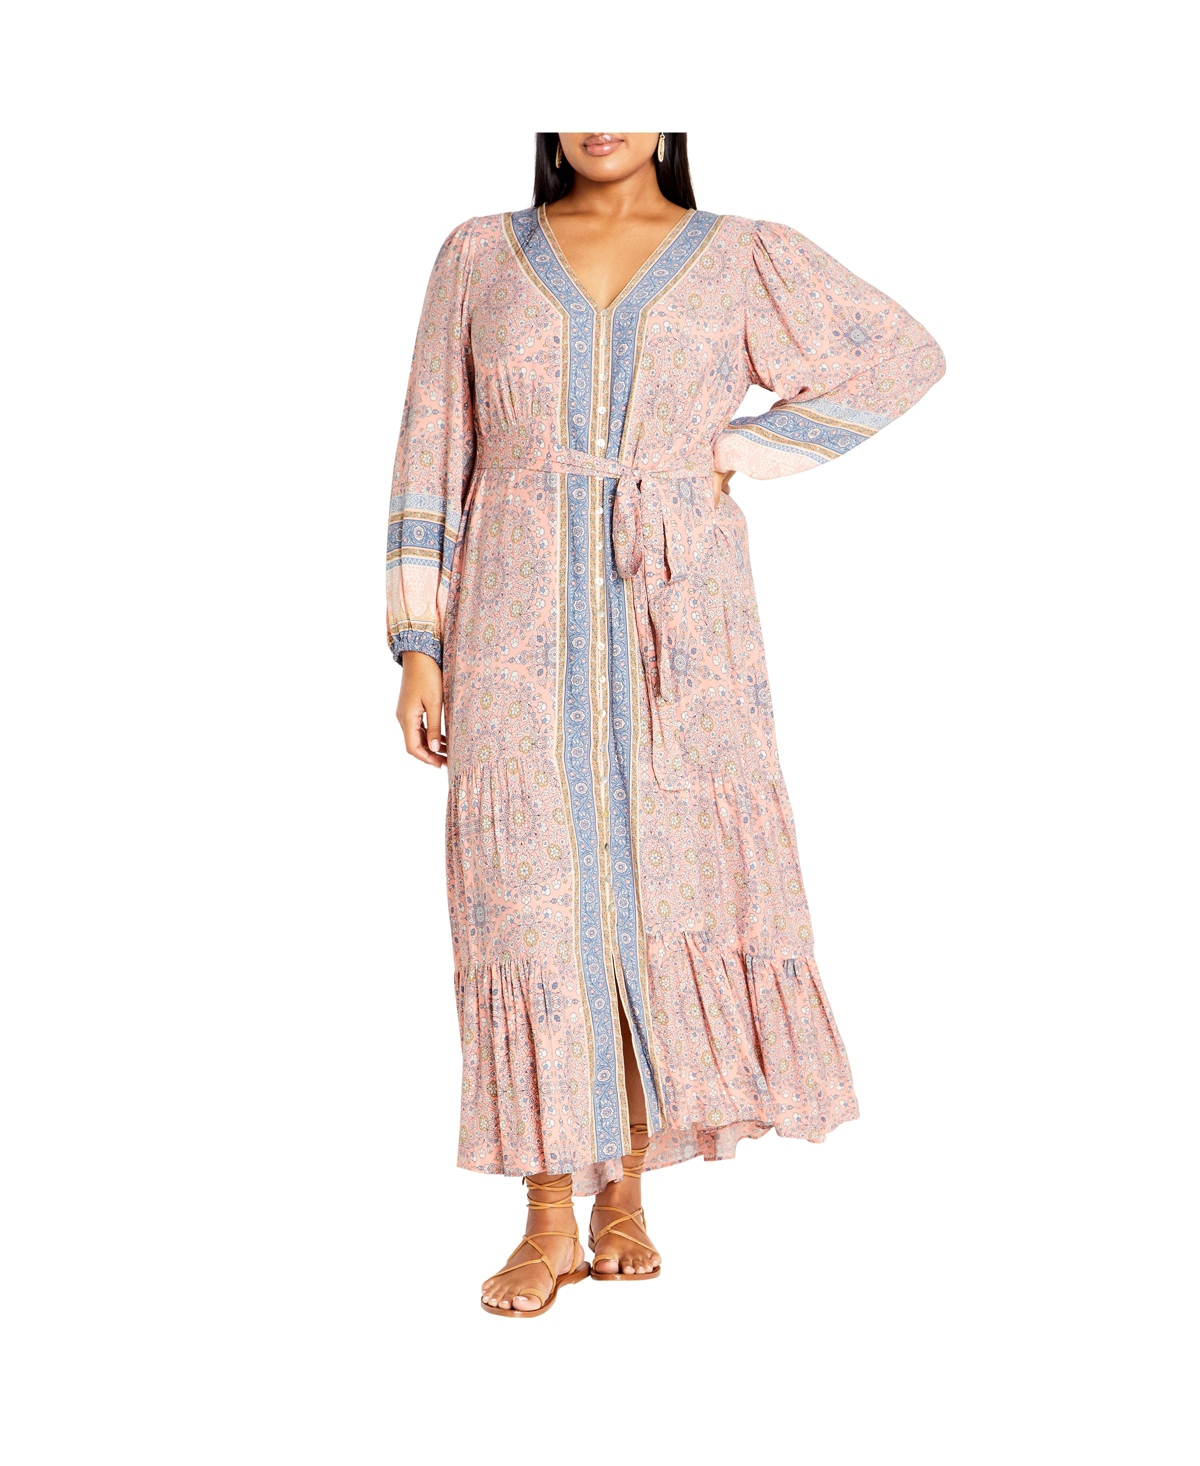 Plus Size Clover Dress - Peachy border